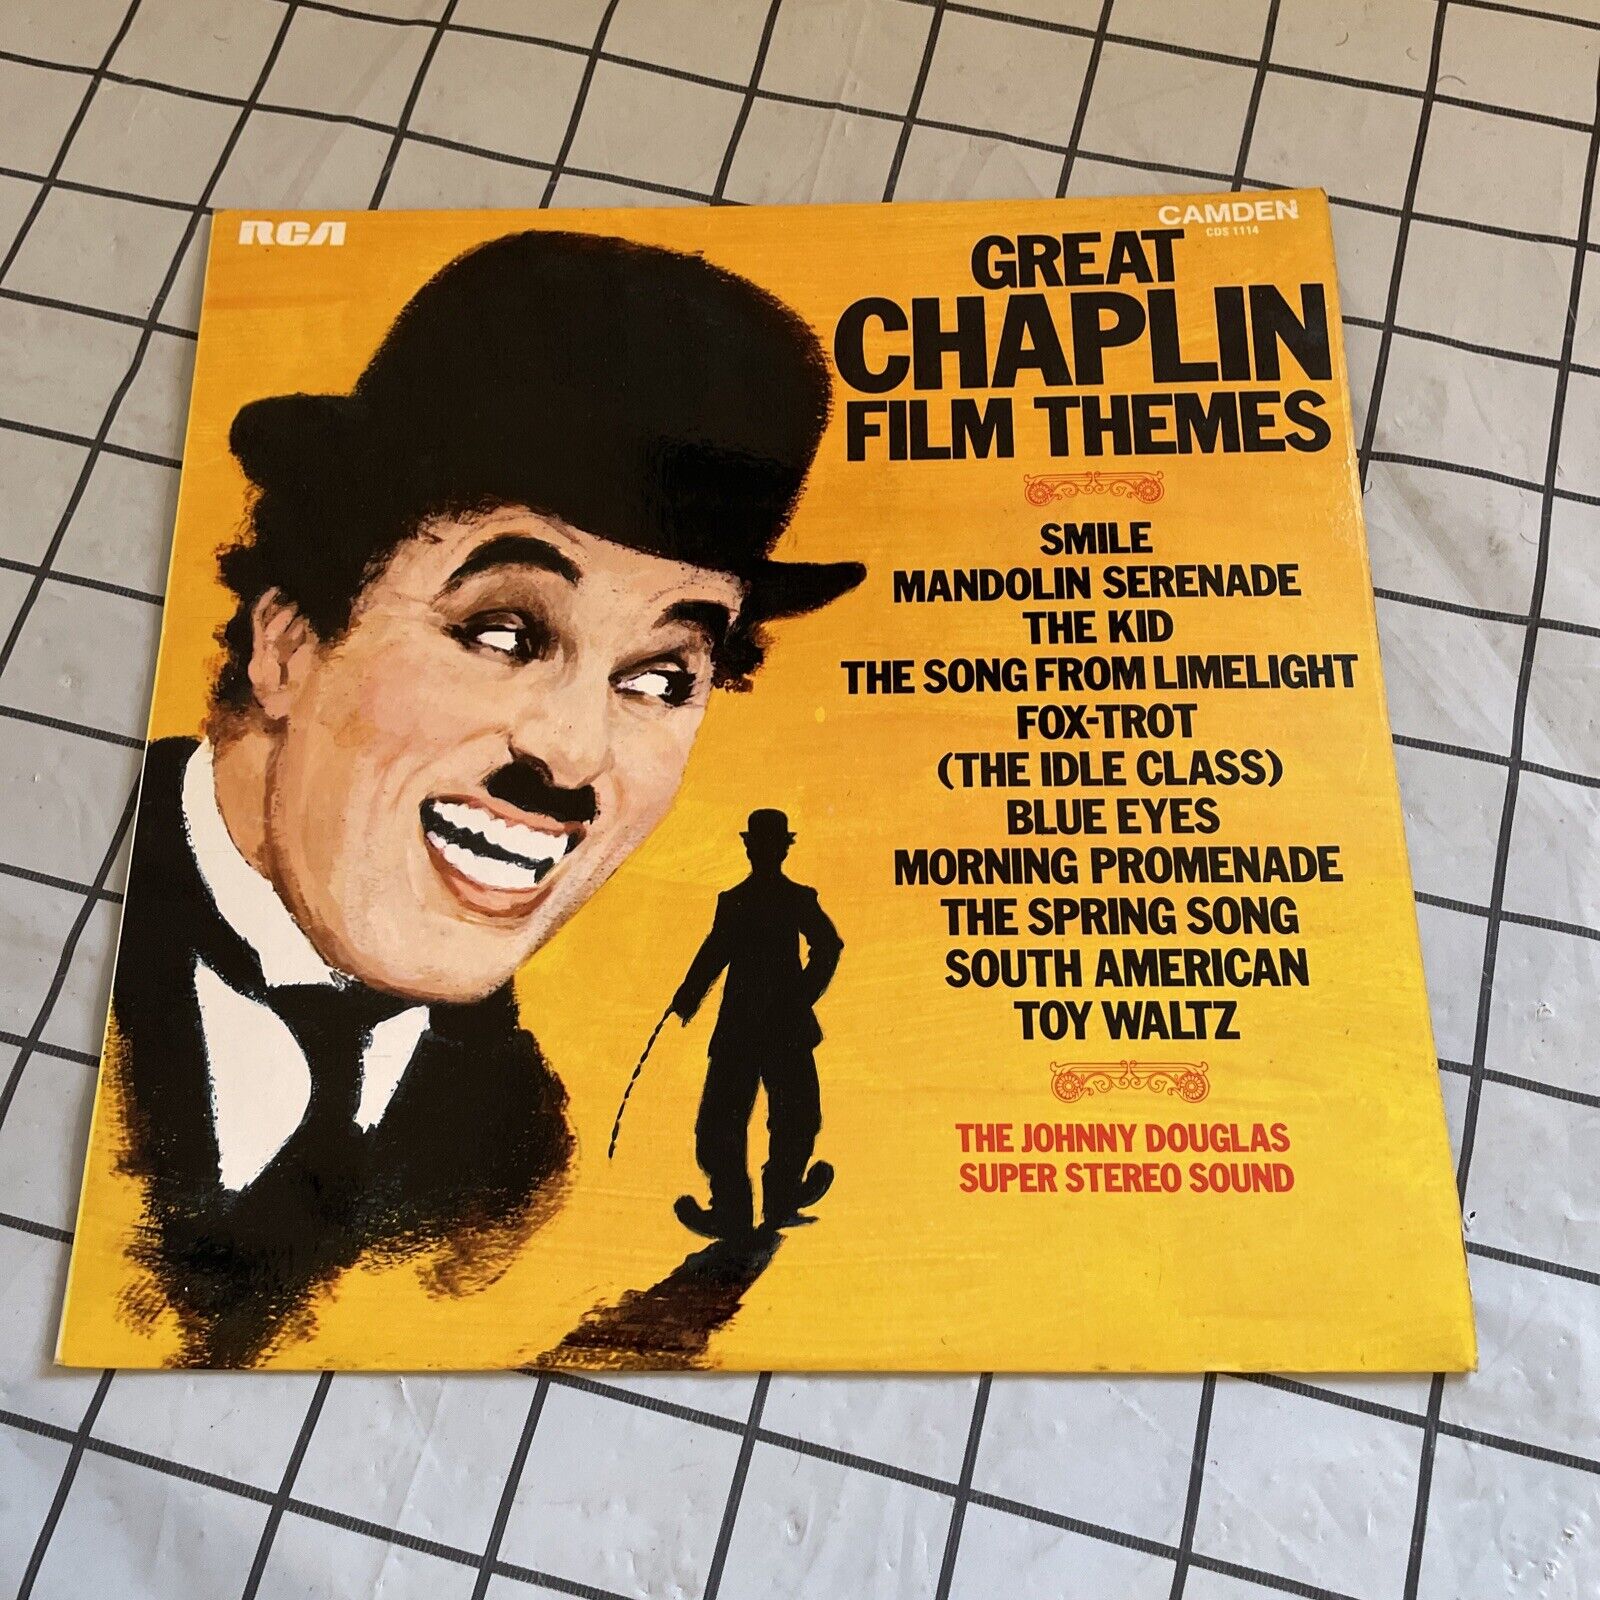 CHARLIE CHAPLIN GREAT CHAPLIN FILM THEMES BY THE JOHNNY DOUGLAS SUPER STEREO